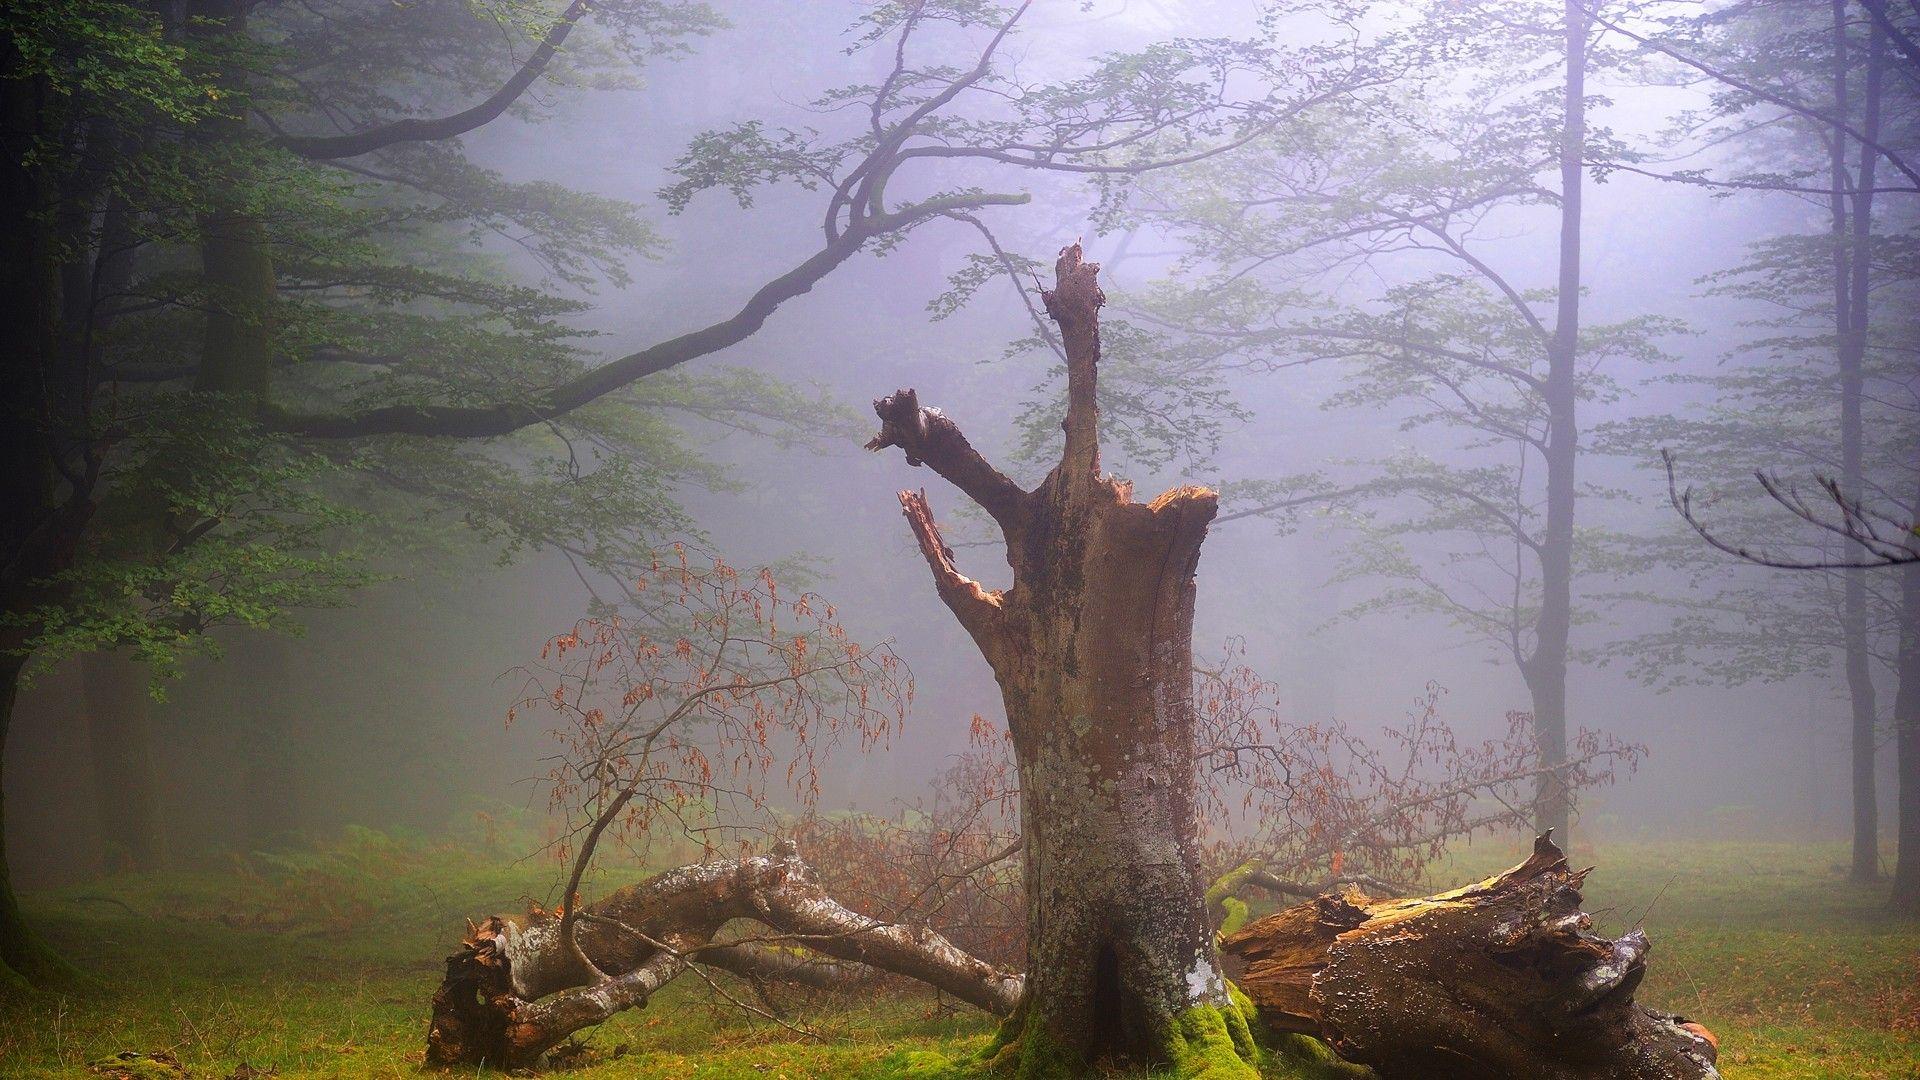 Dead tree in a foggy forest wallpaper. PC